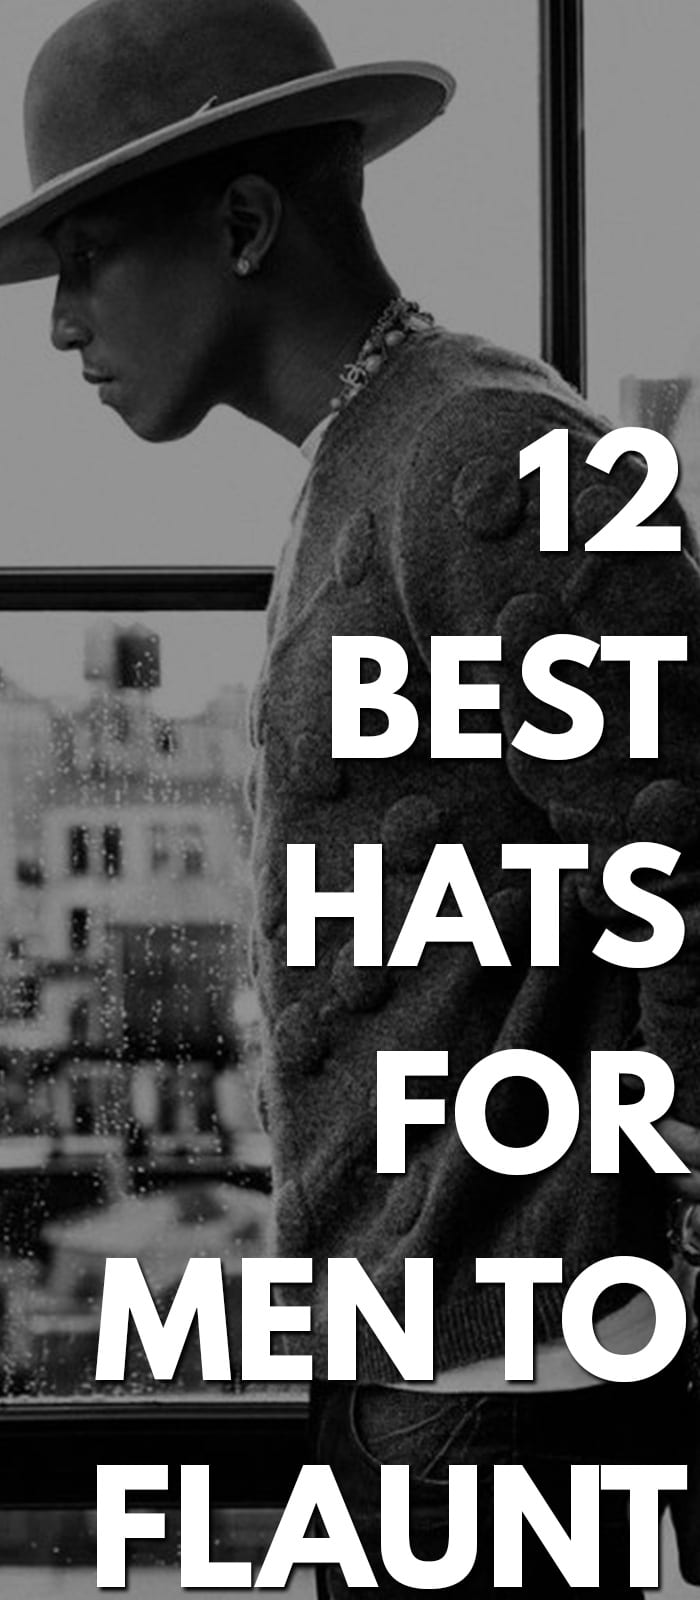 Best Hats For Men To Flaunt